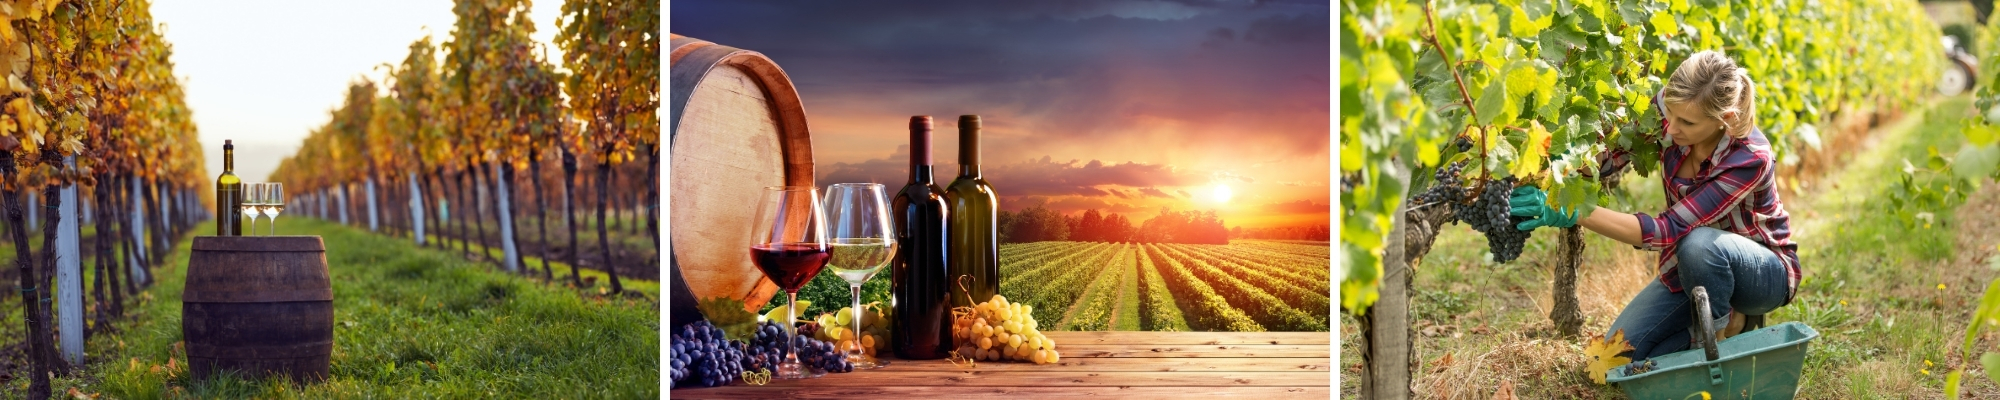 Vineyard and Winery Financing